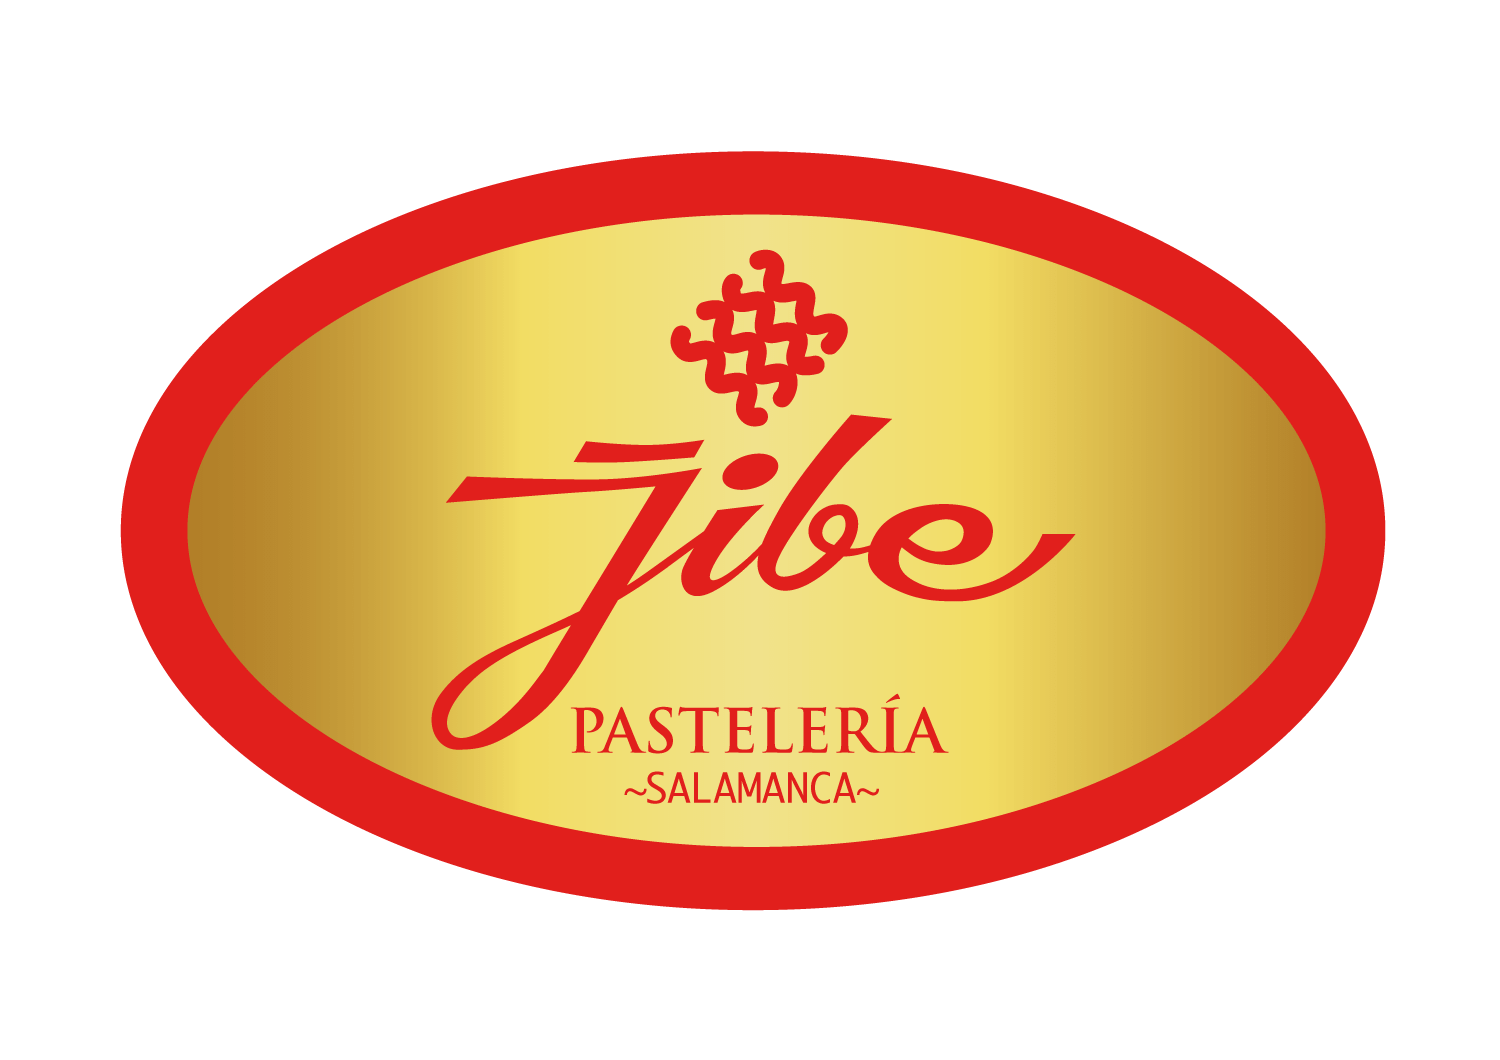 Pastelería Jibe logo - hornazo online - hornazotradicional.com